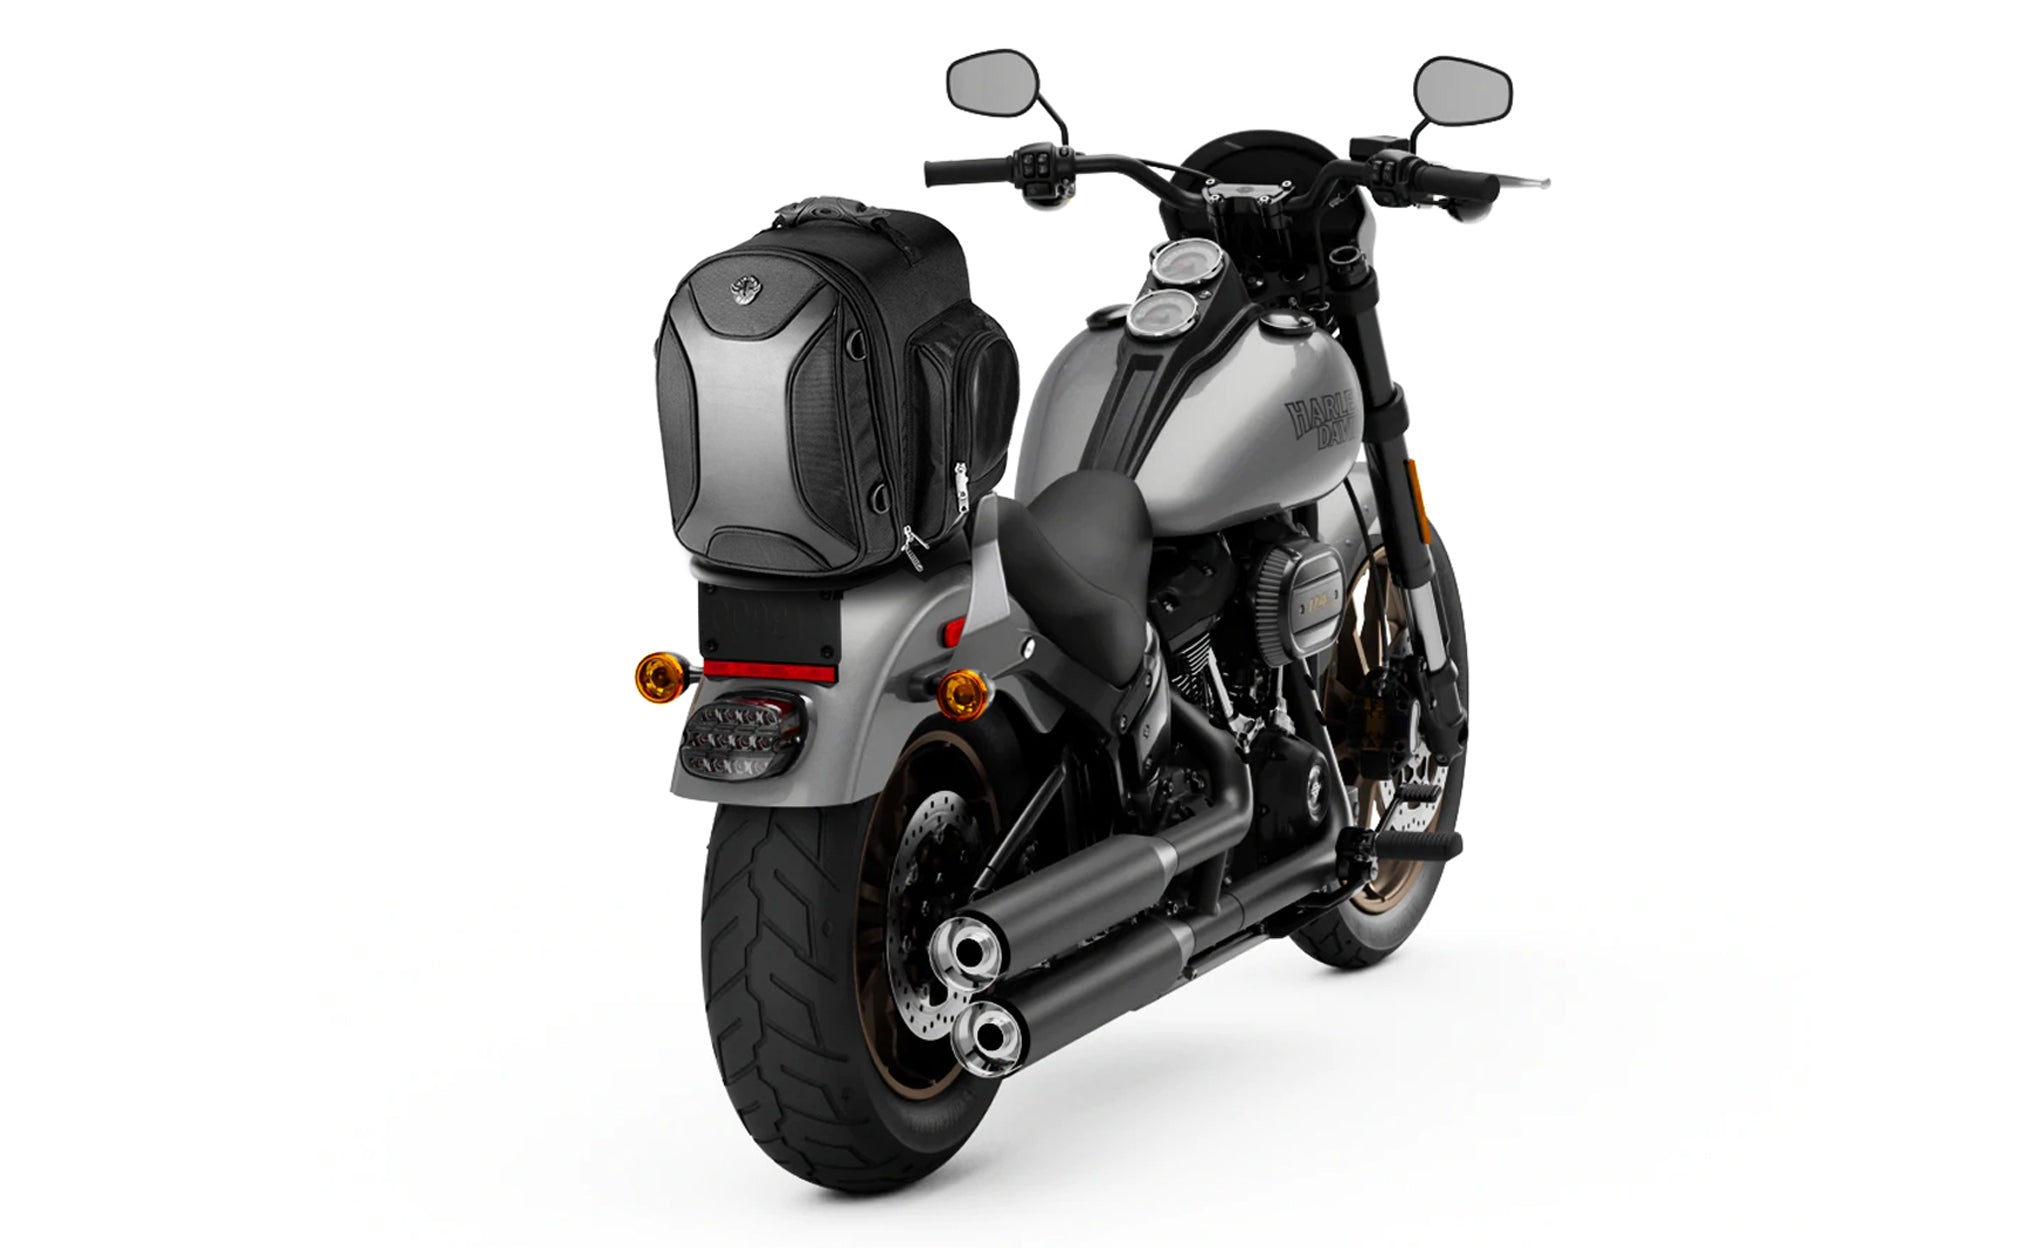 Viking Dagr Small Honda Motorcycle Tail Bag Bag on Bike View @expand